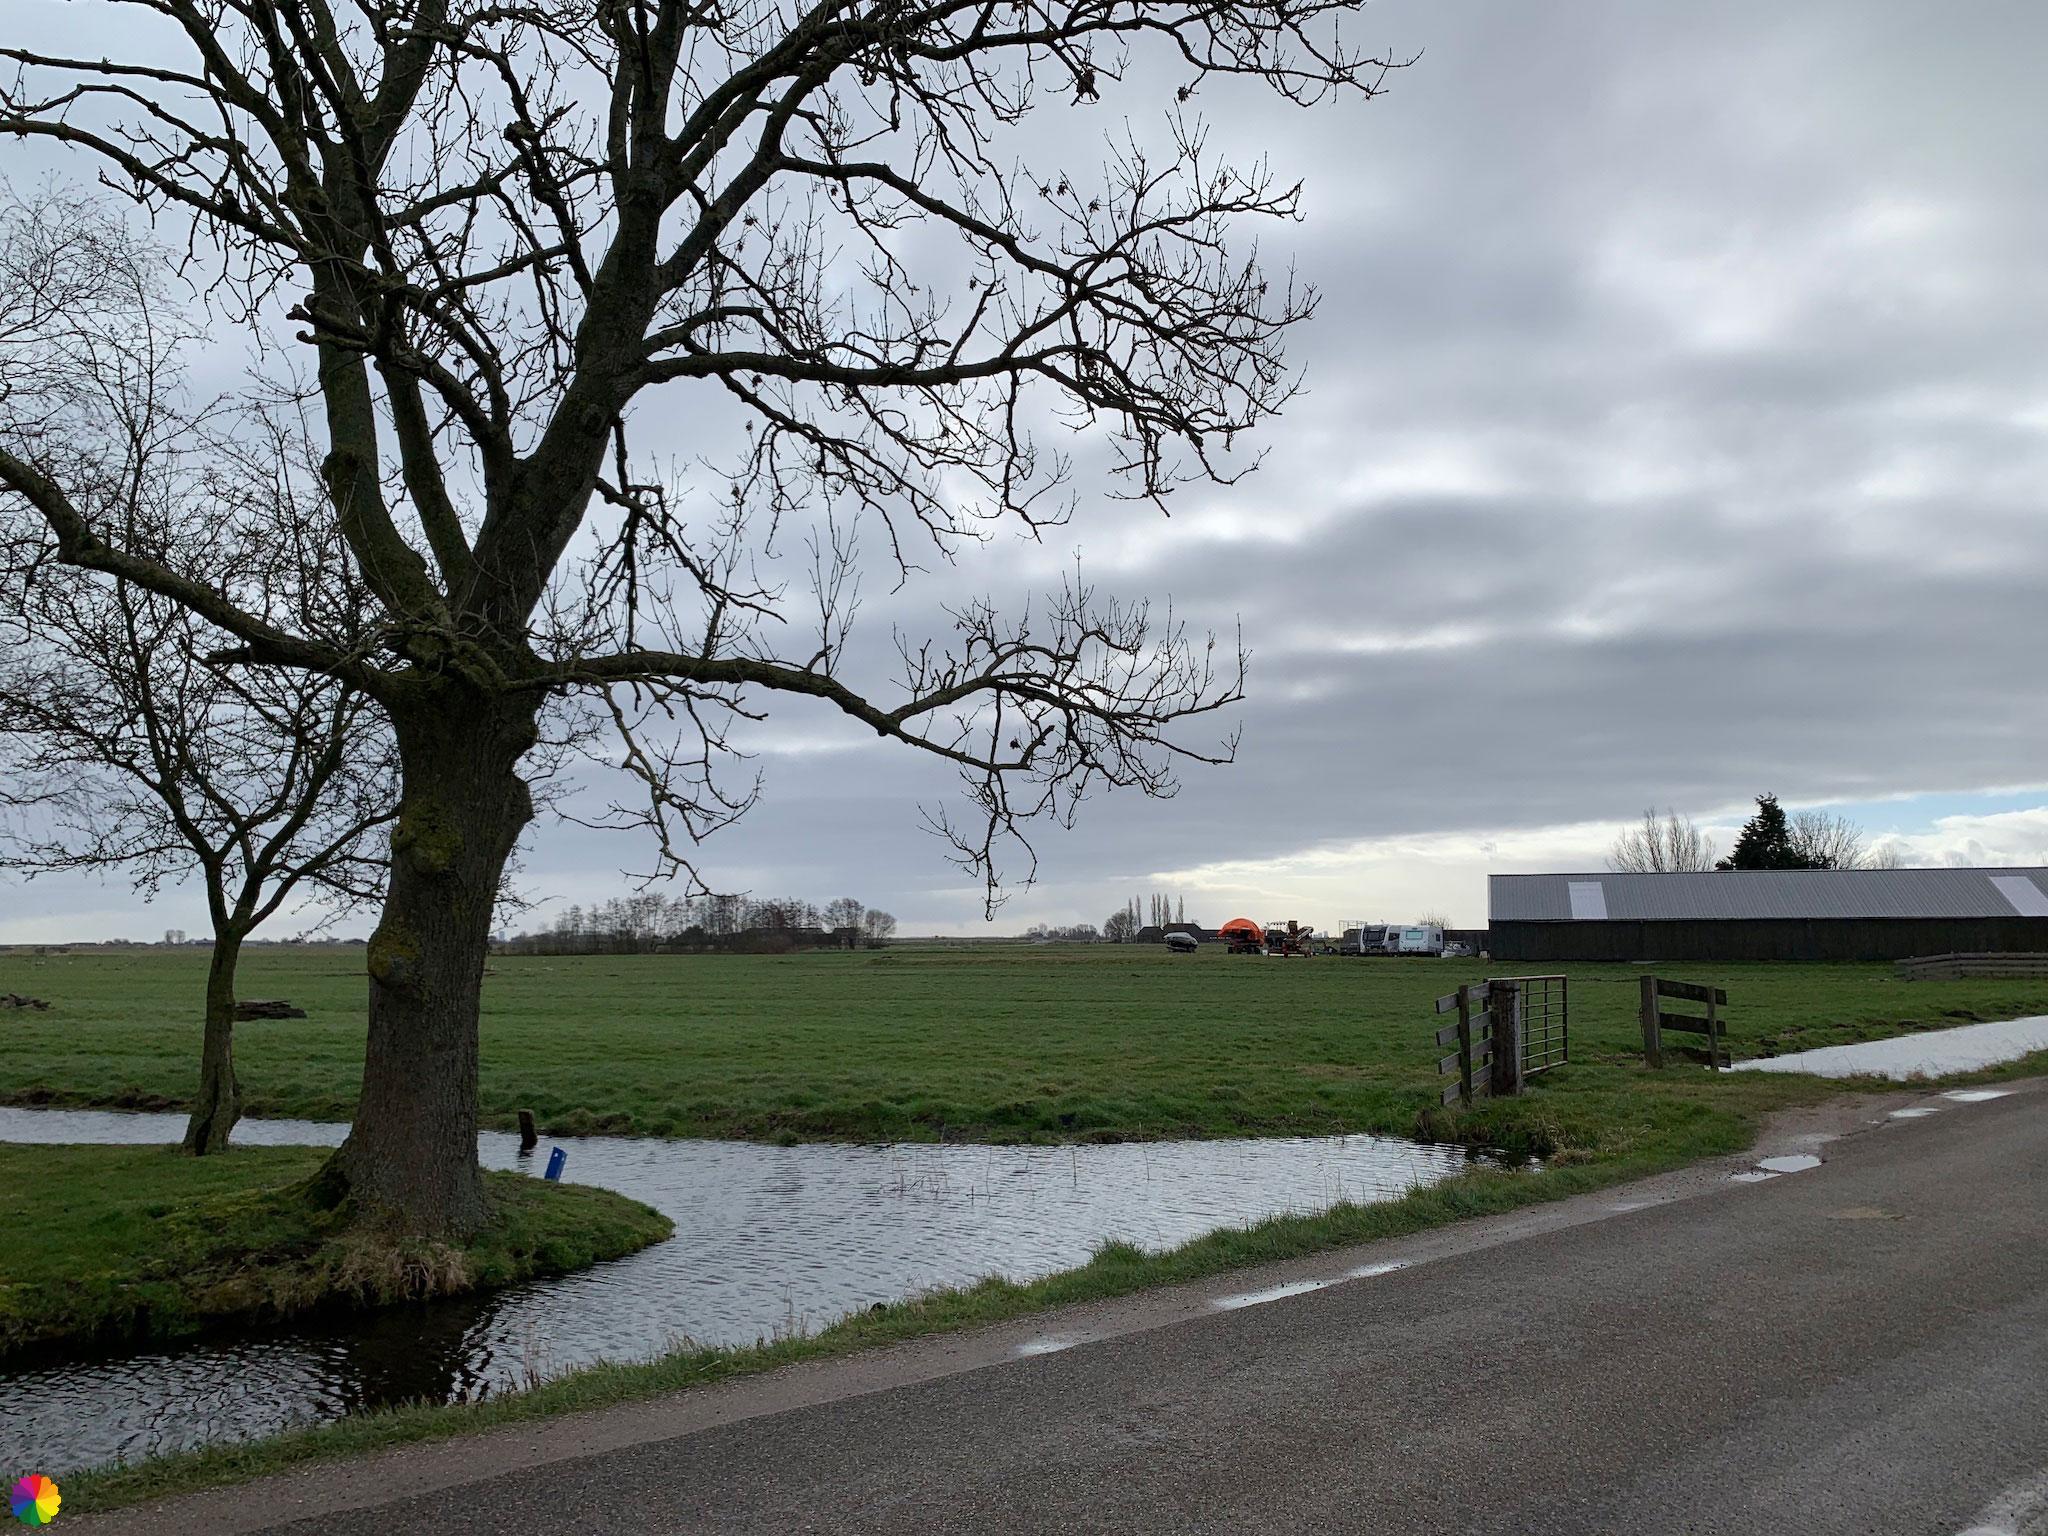 Through the polder in Waterland